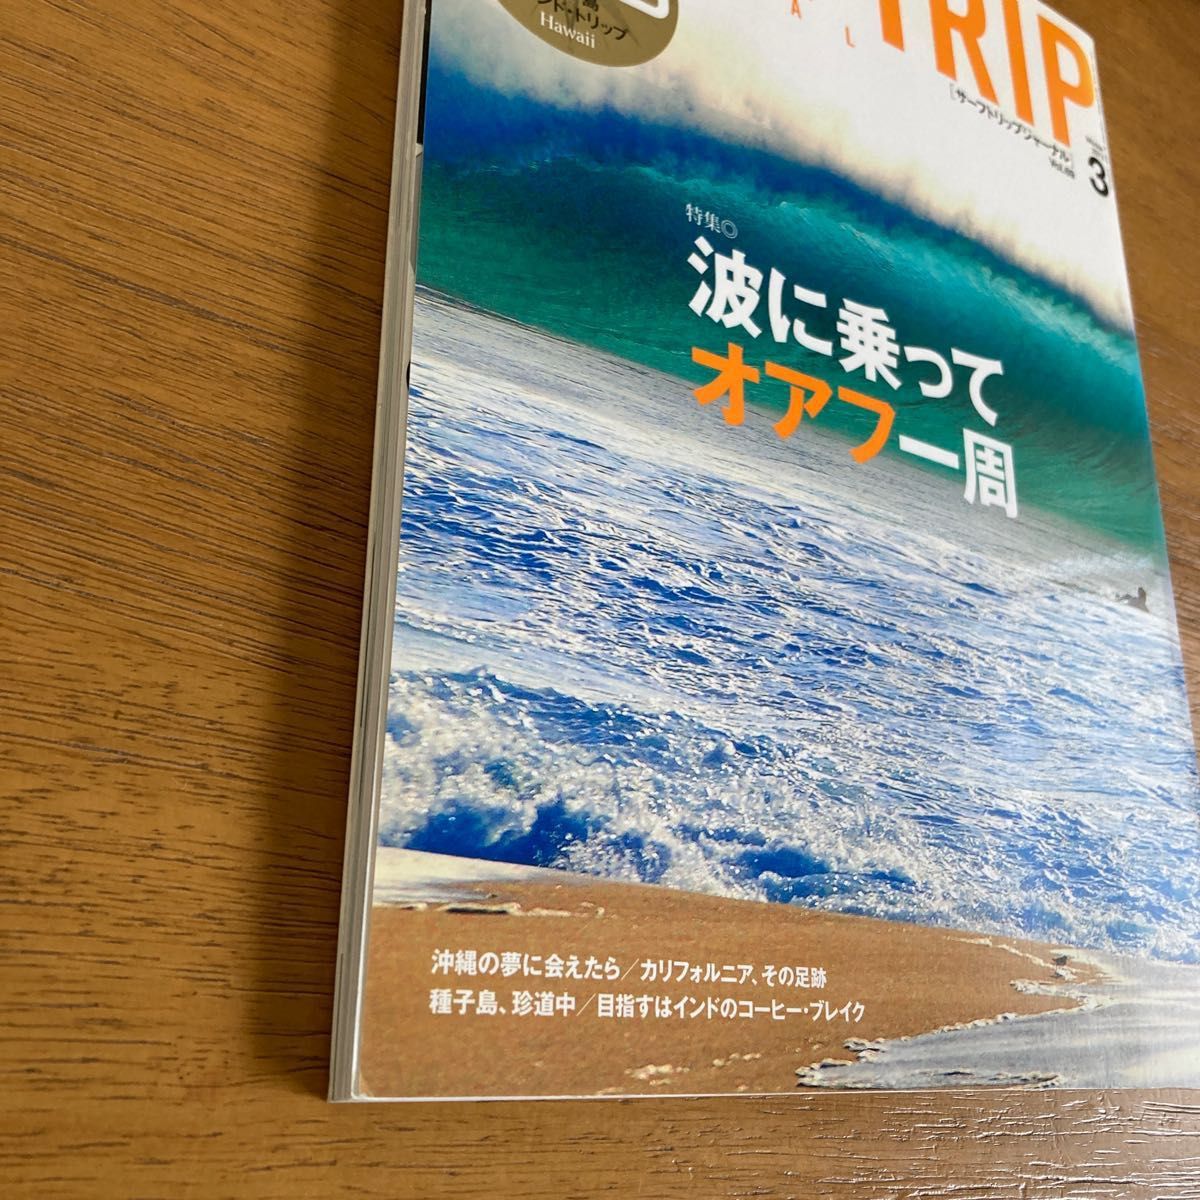 surf trip journal vol.69 サーフトリップジャーナル